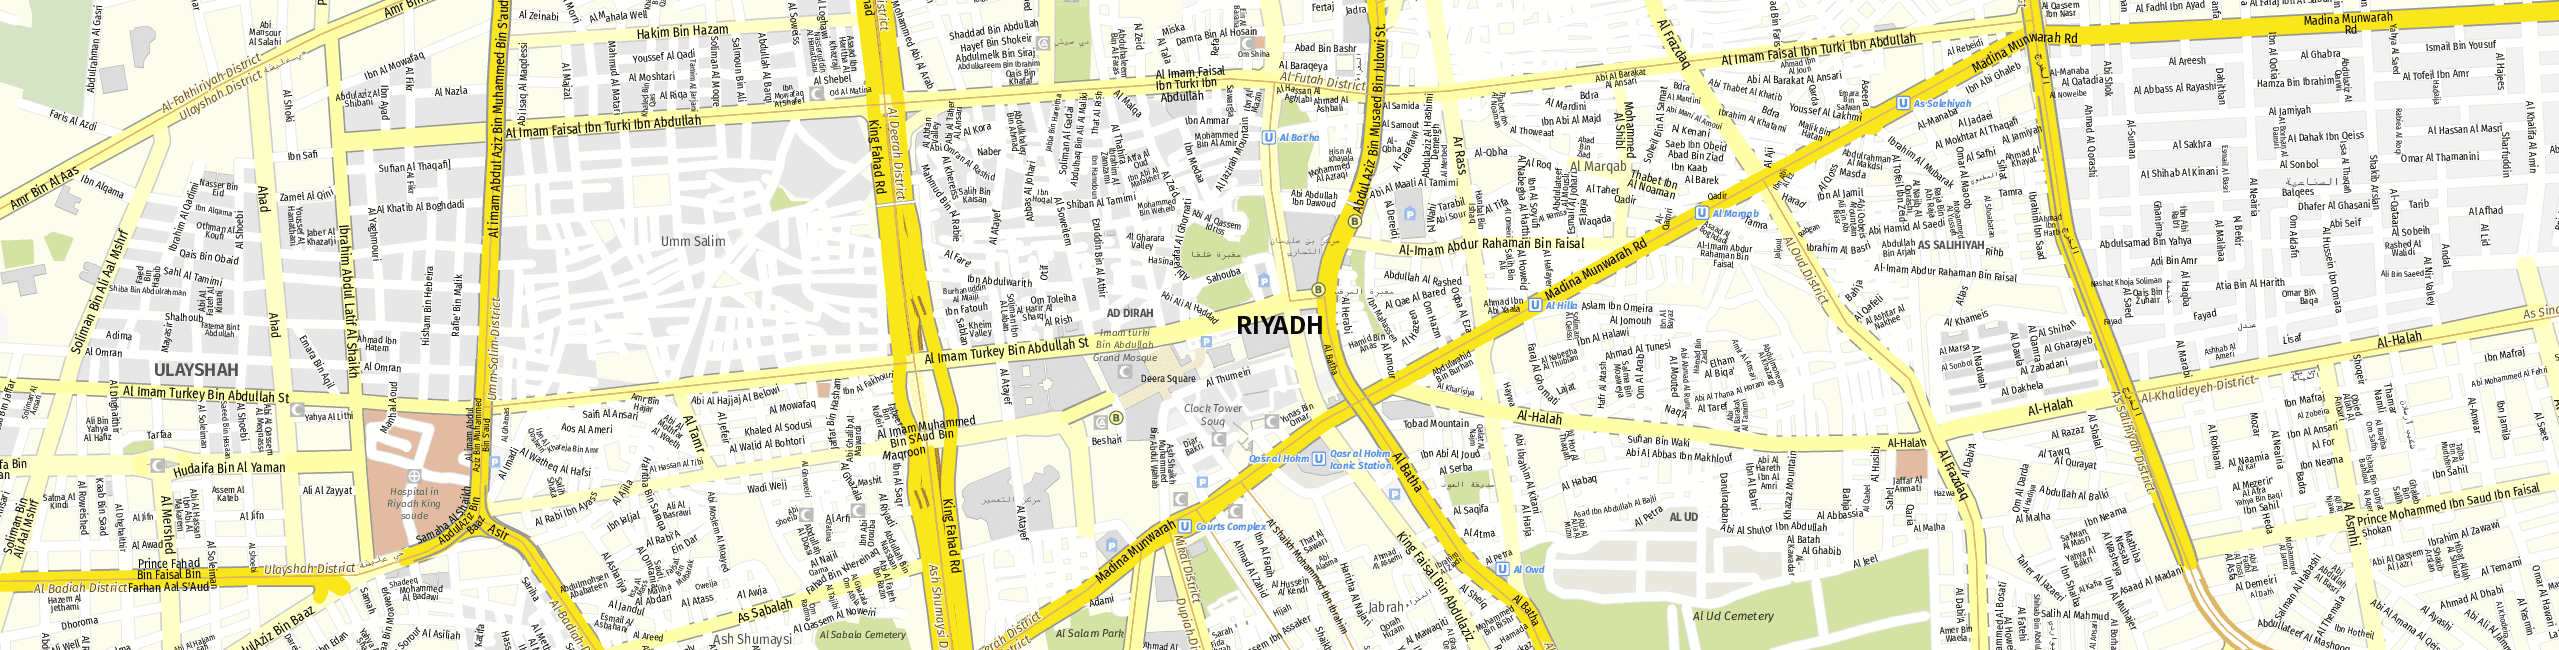 Stadtplan Riyadh zum Downloaden.